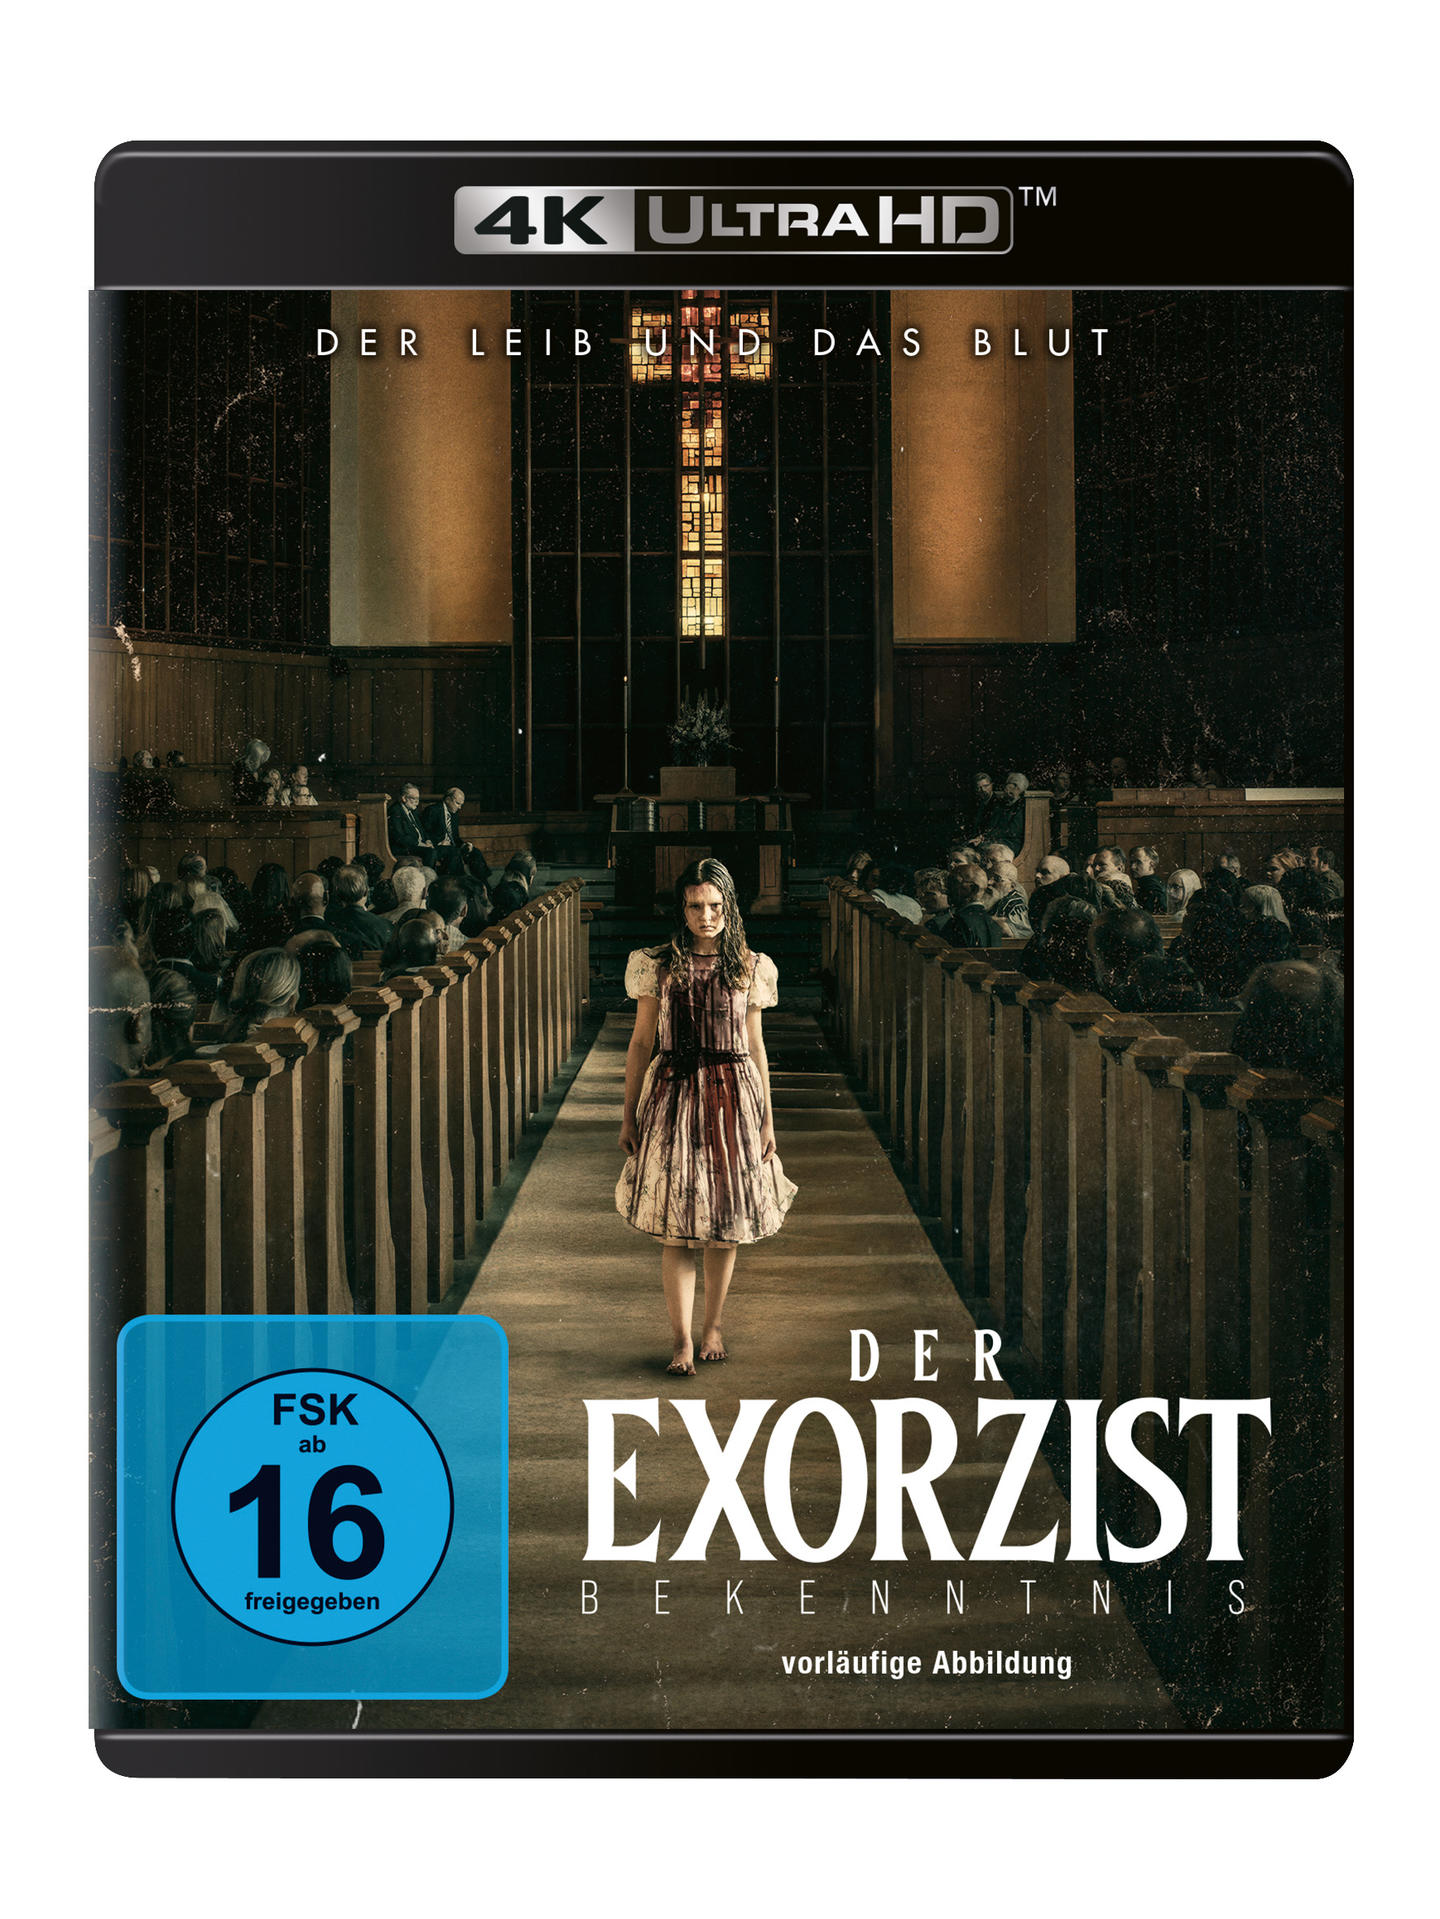 Der Exorzist: 4K Bekenntnis Blu-ray Ultra HD